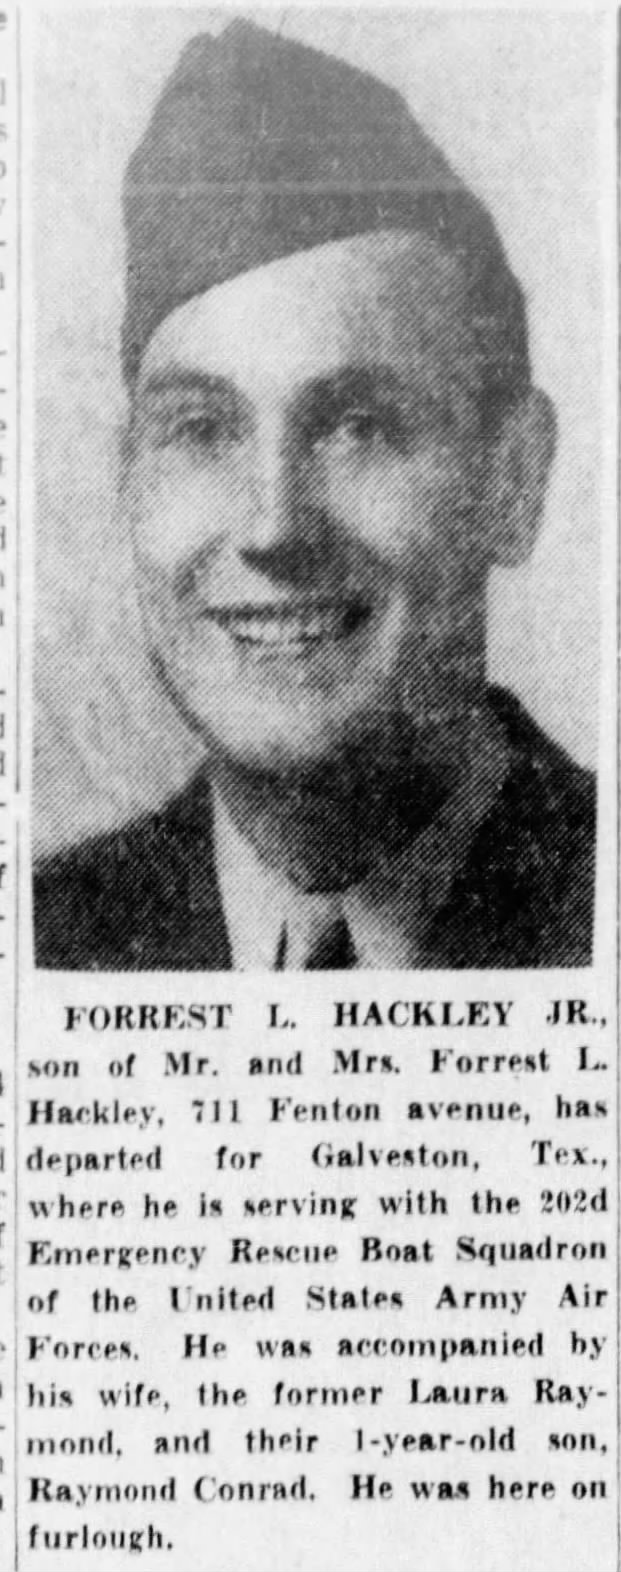 Hackley, Forrest L.,jr.  To Galveston 08 May 1944.